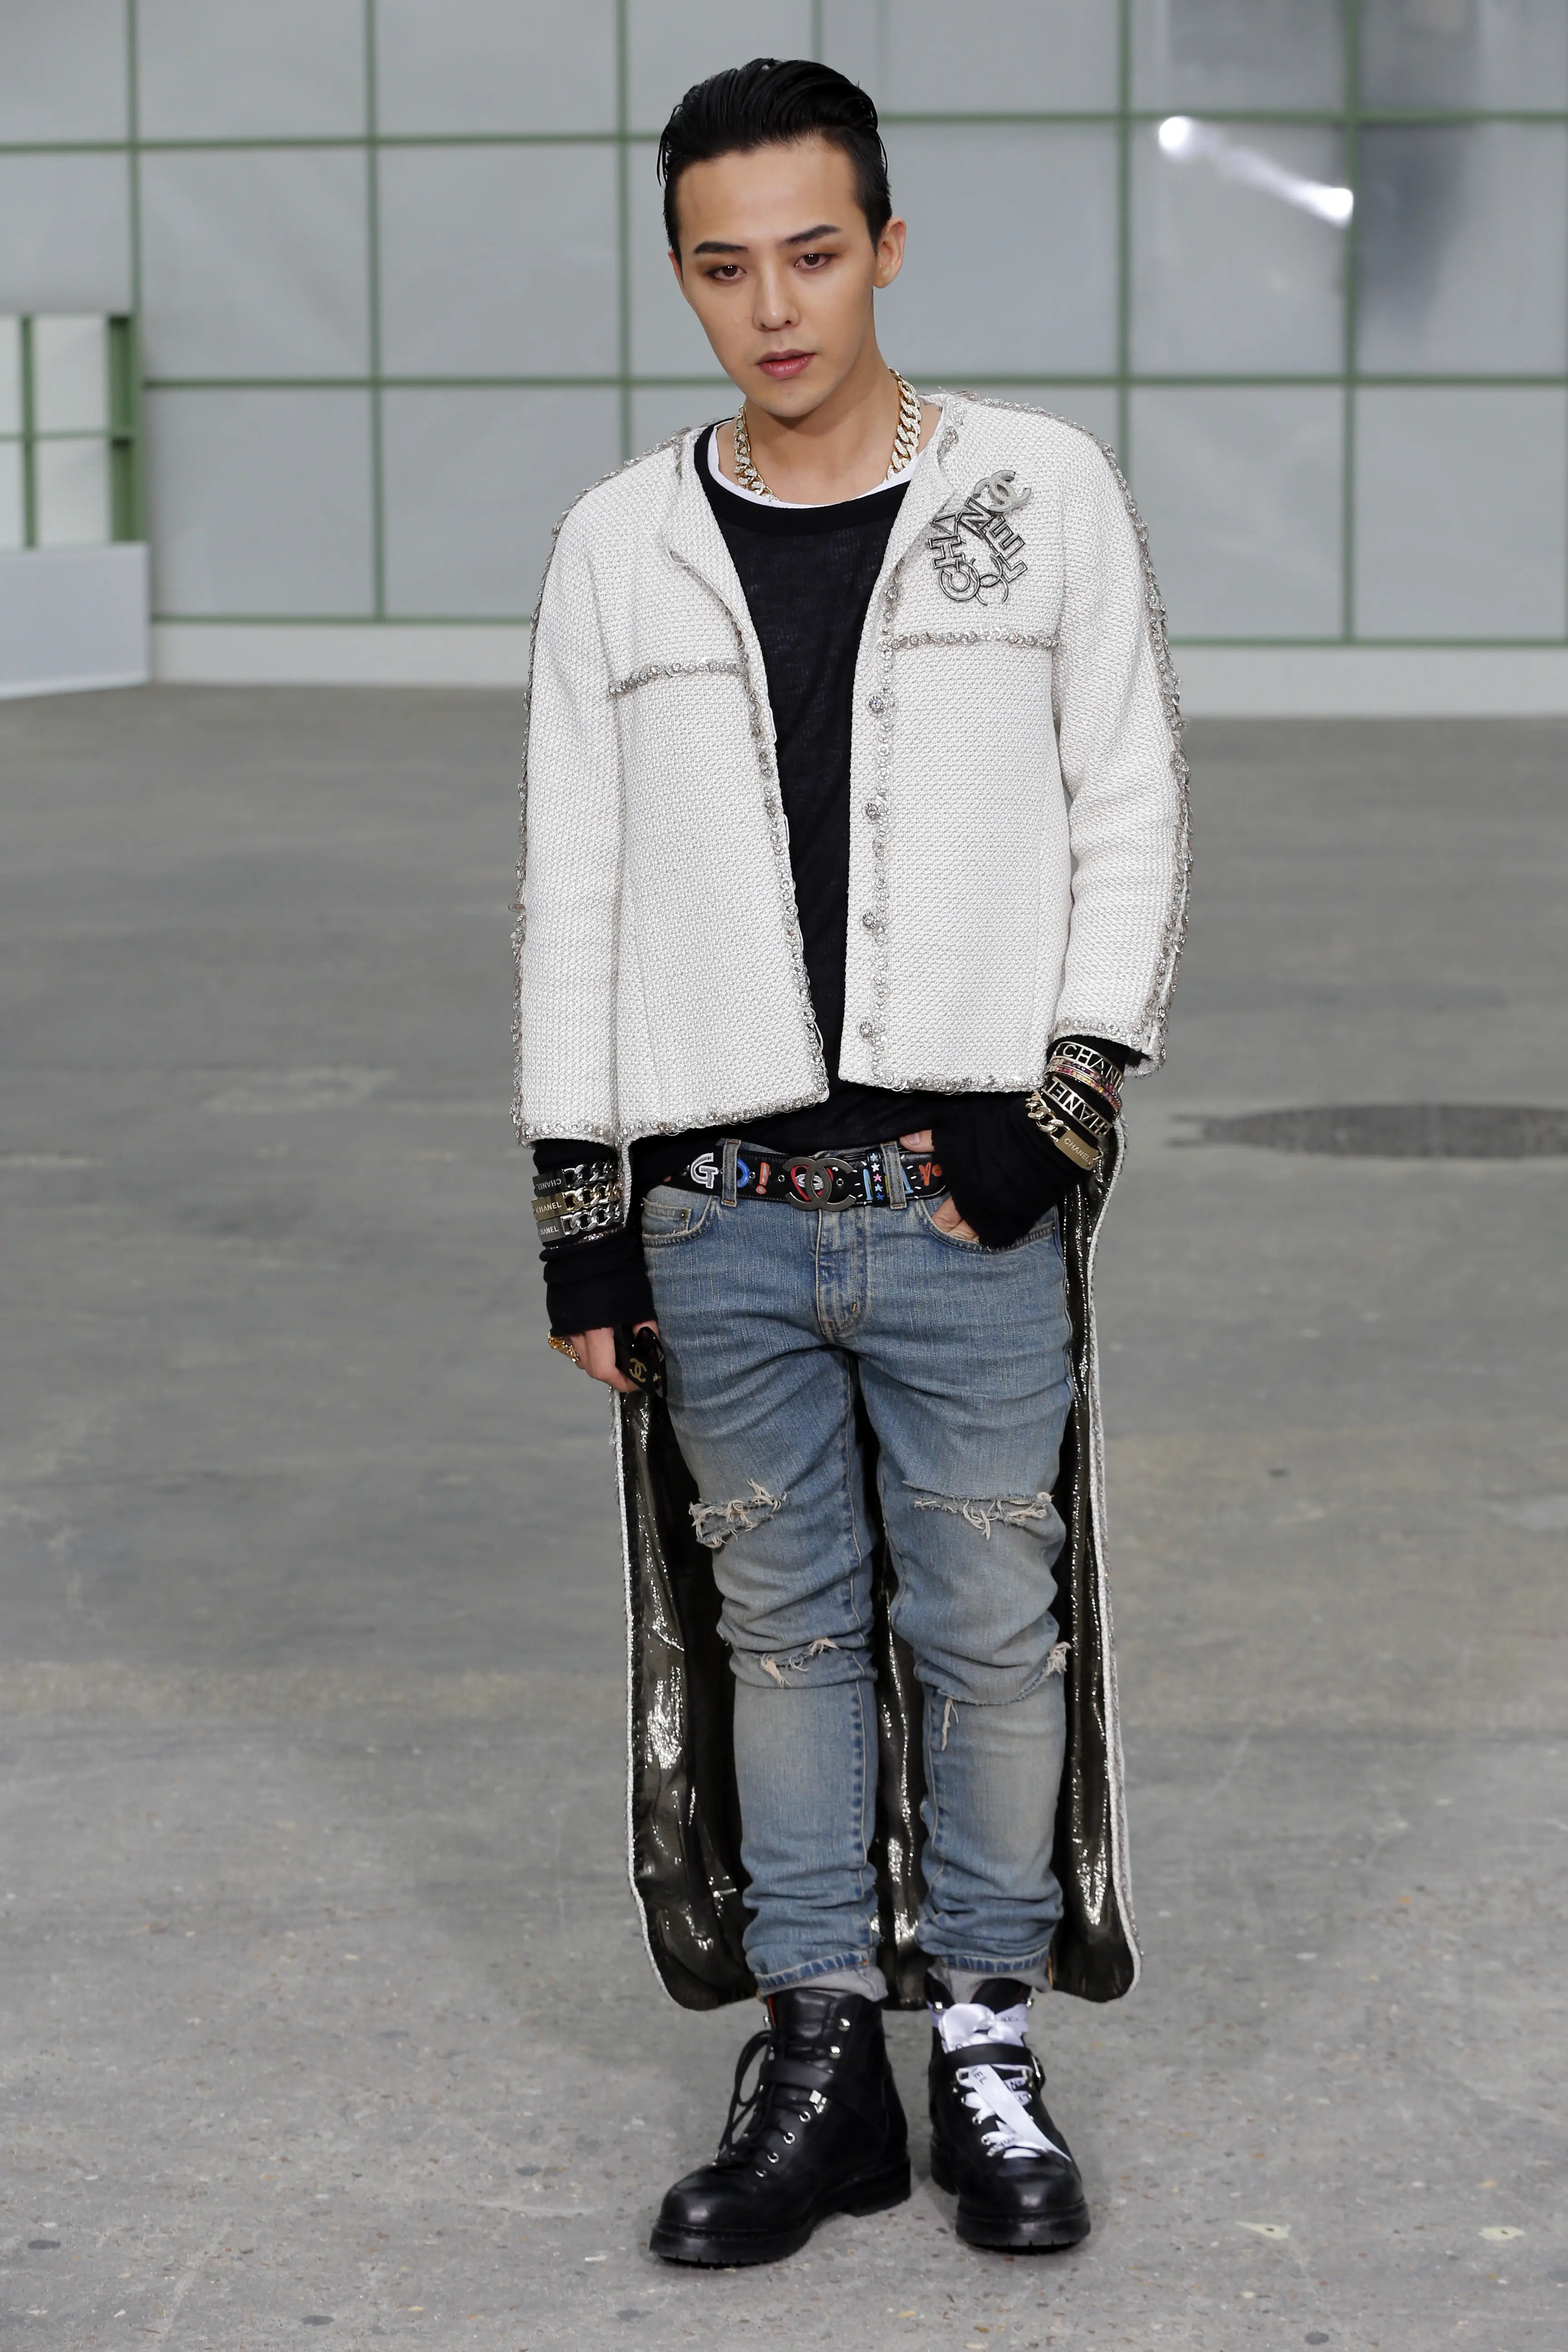 G-Dragon BigBang. (AFP/Bintang.com)